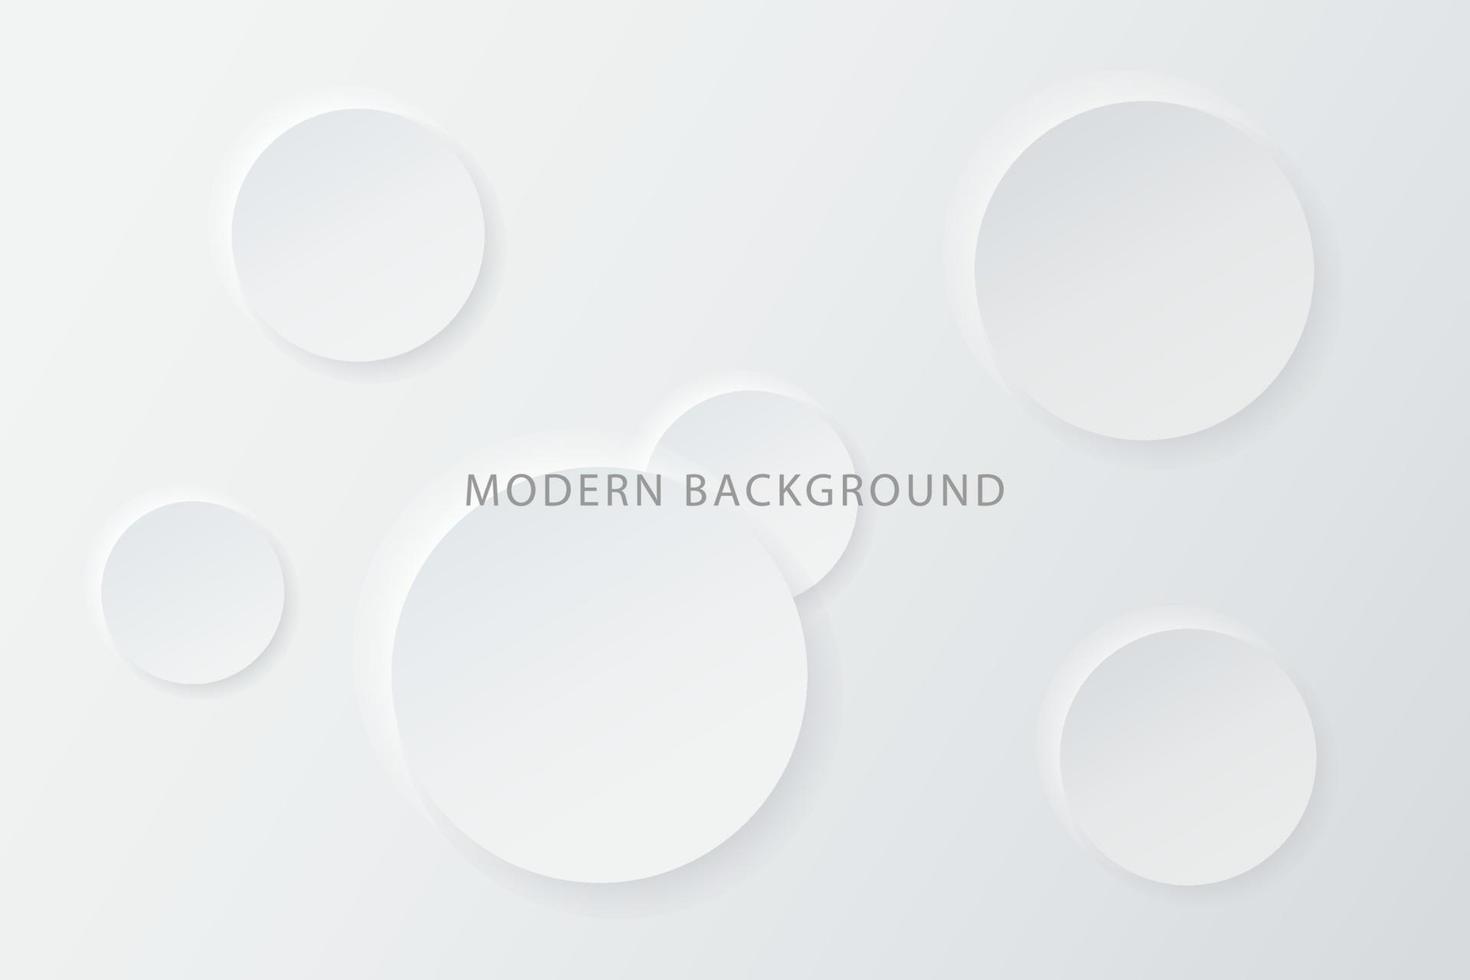 vit modern neomorphism abstrakt bakgrund. lutning bakgrund med neomorphism cirklar. vektor